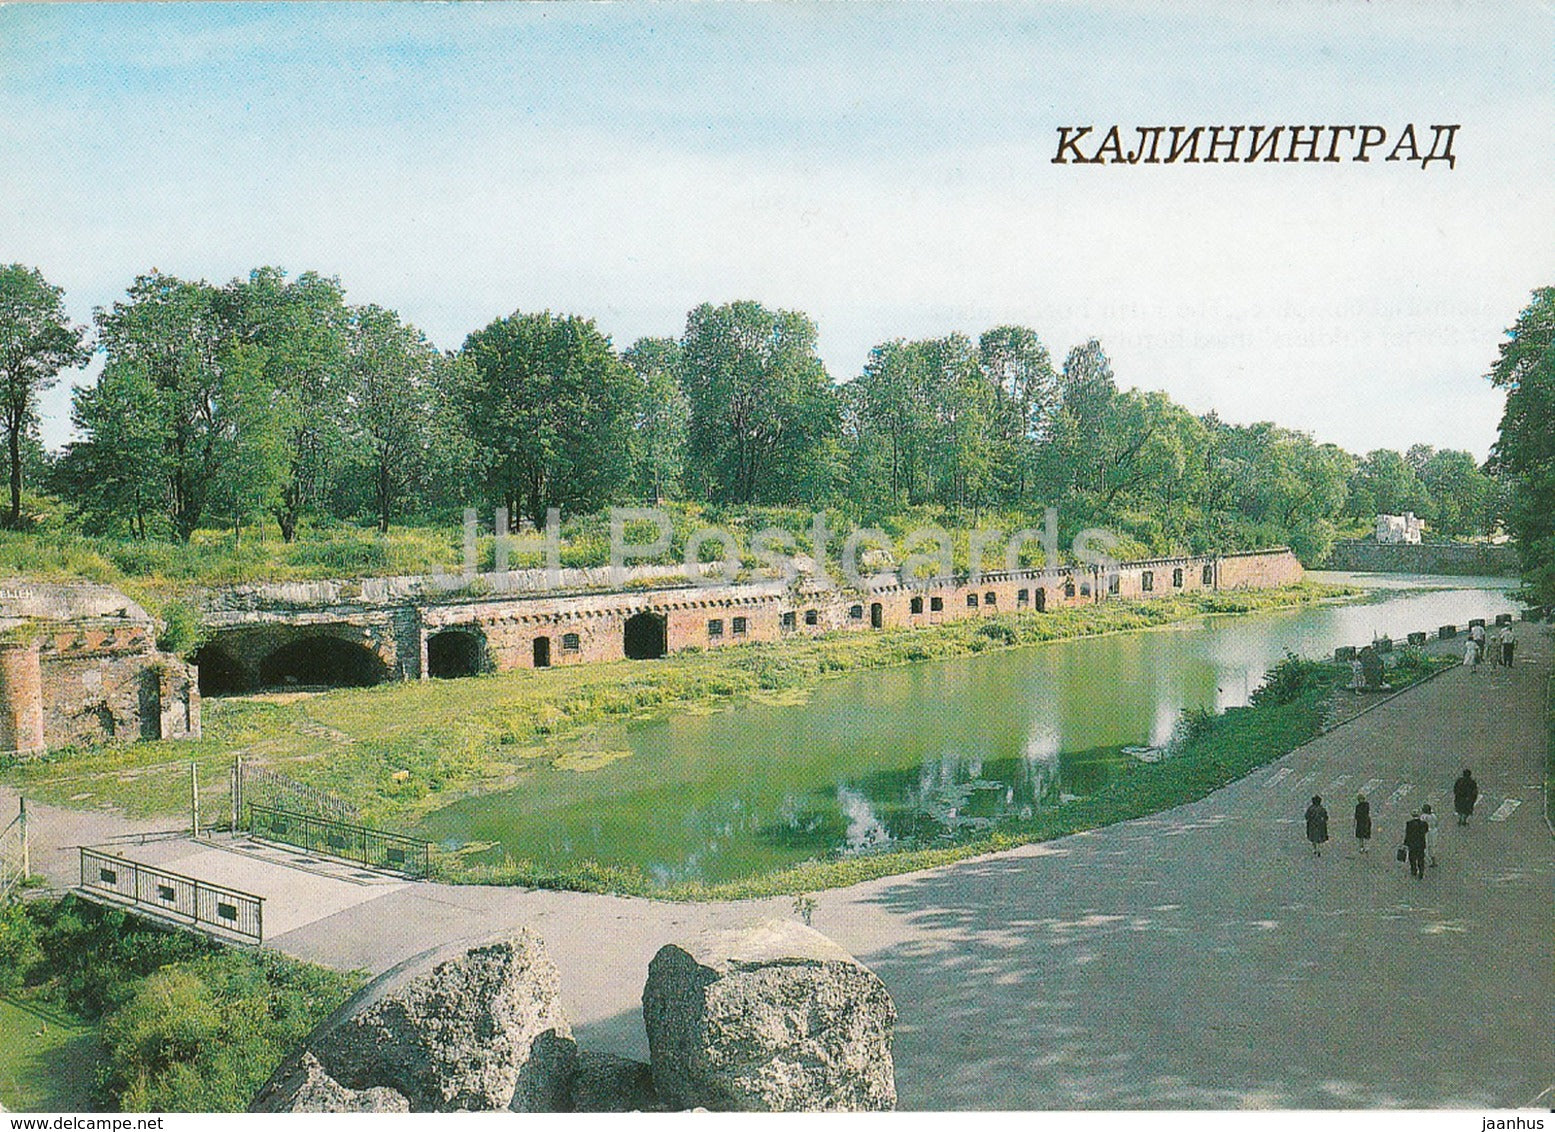 Kaliningrad - Konigsberg - Memorial Complex The Fifth Fort - 1987 - Russia USSR - unused - JH Postcards